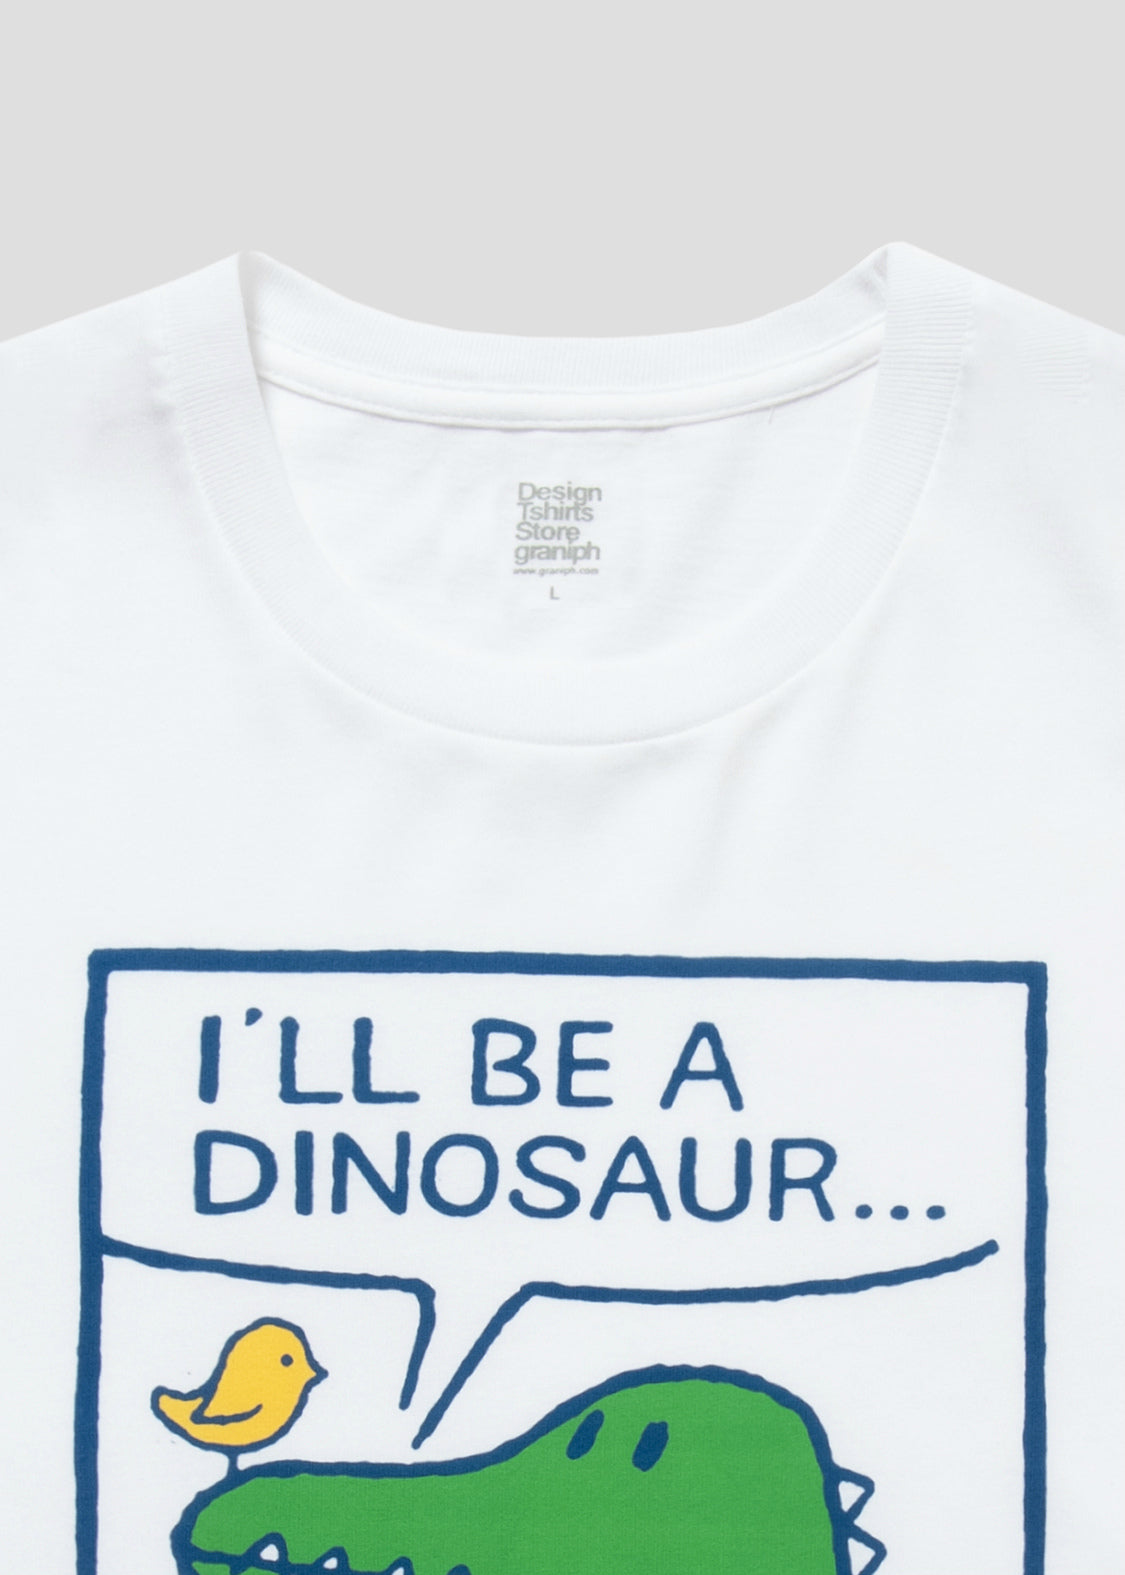 I will be a Dinosaur 2